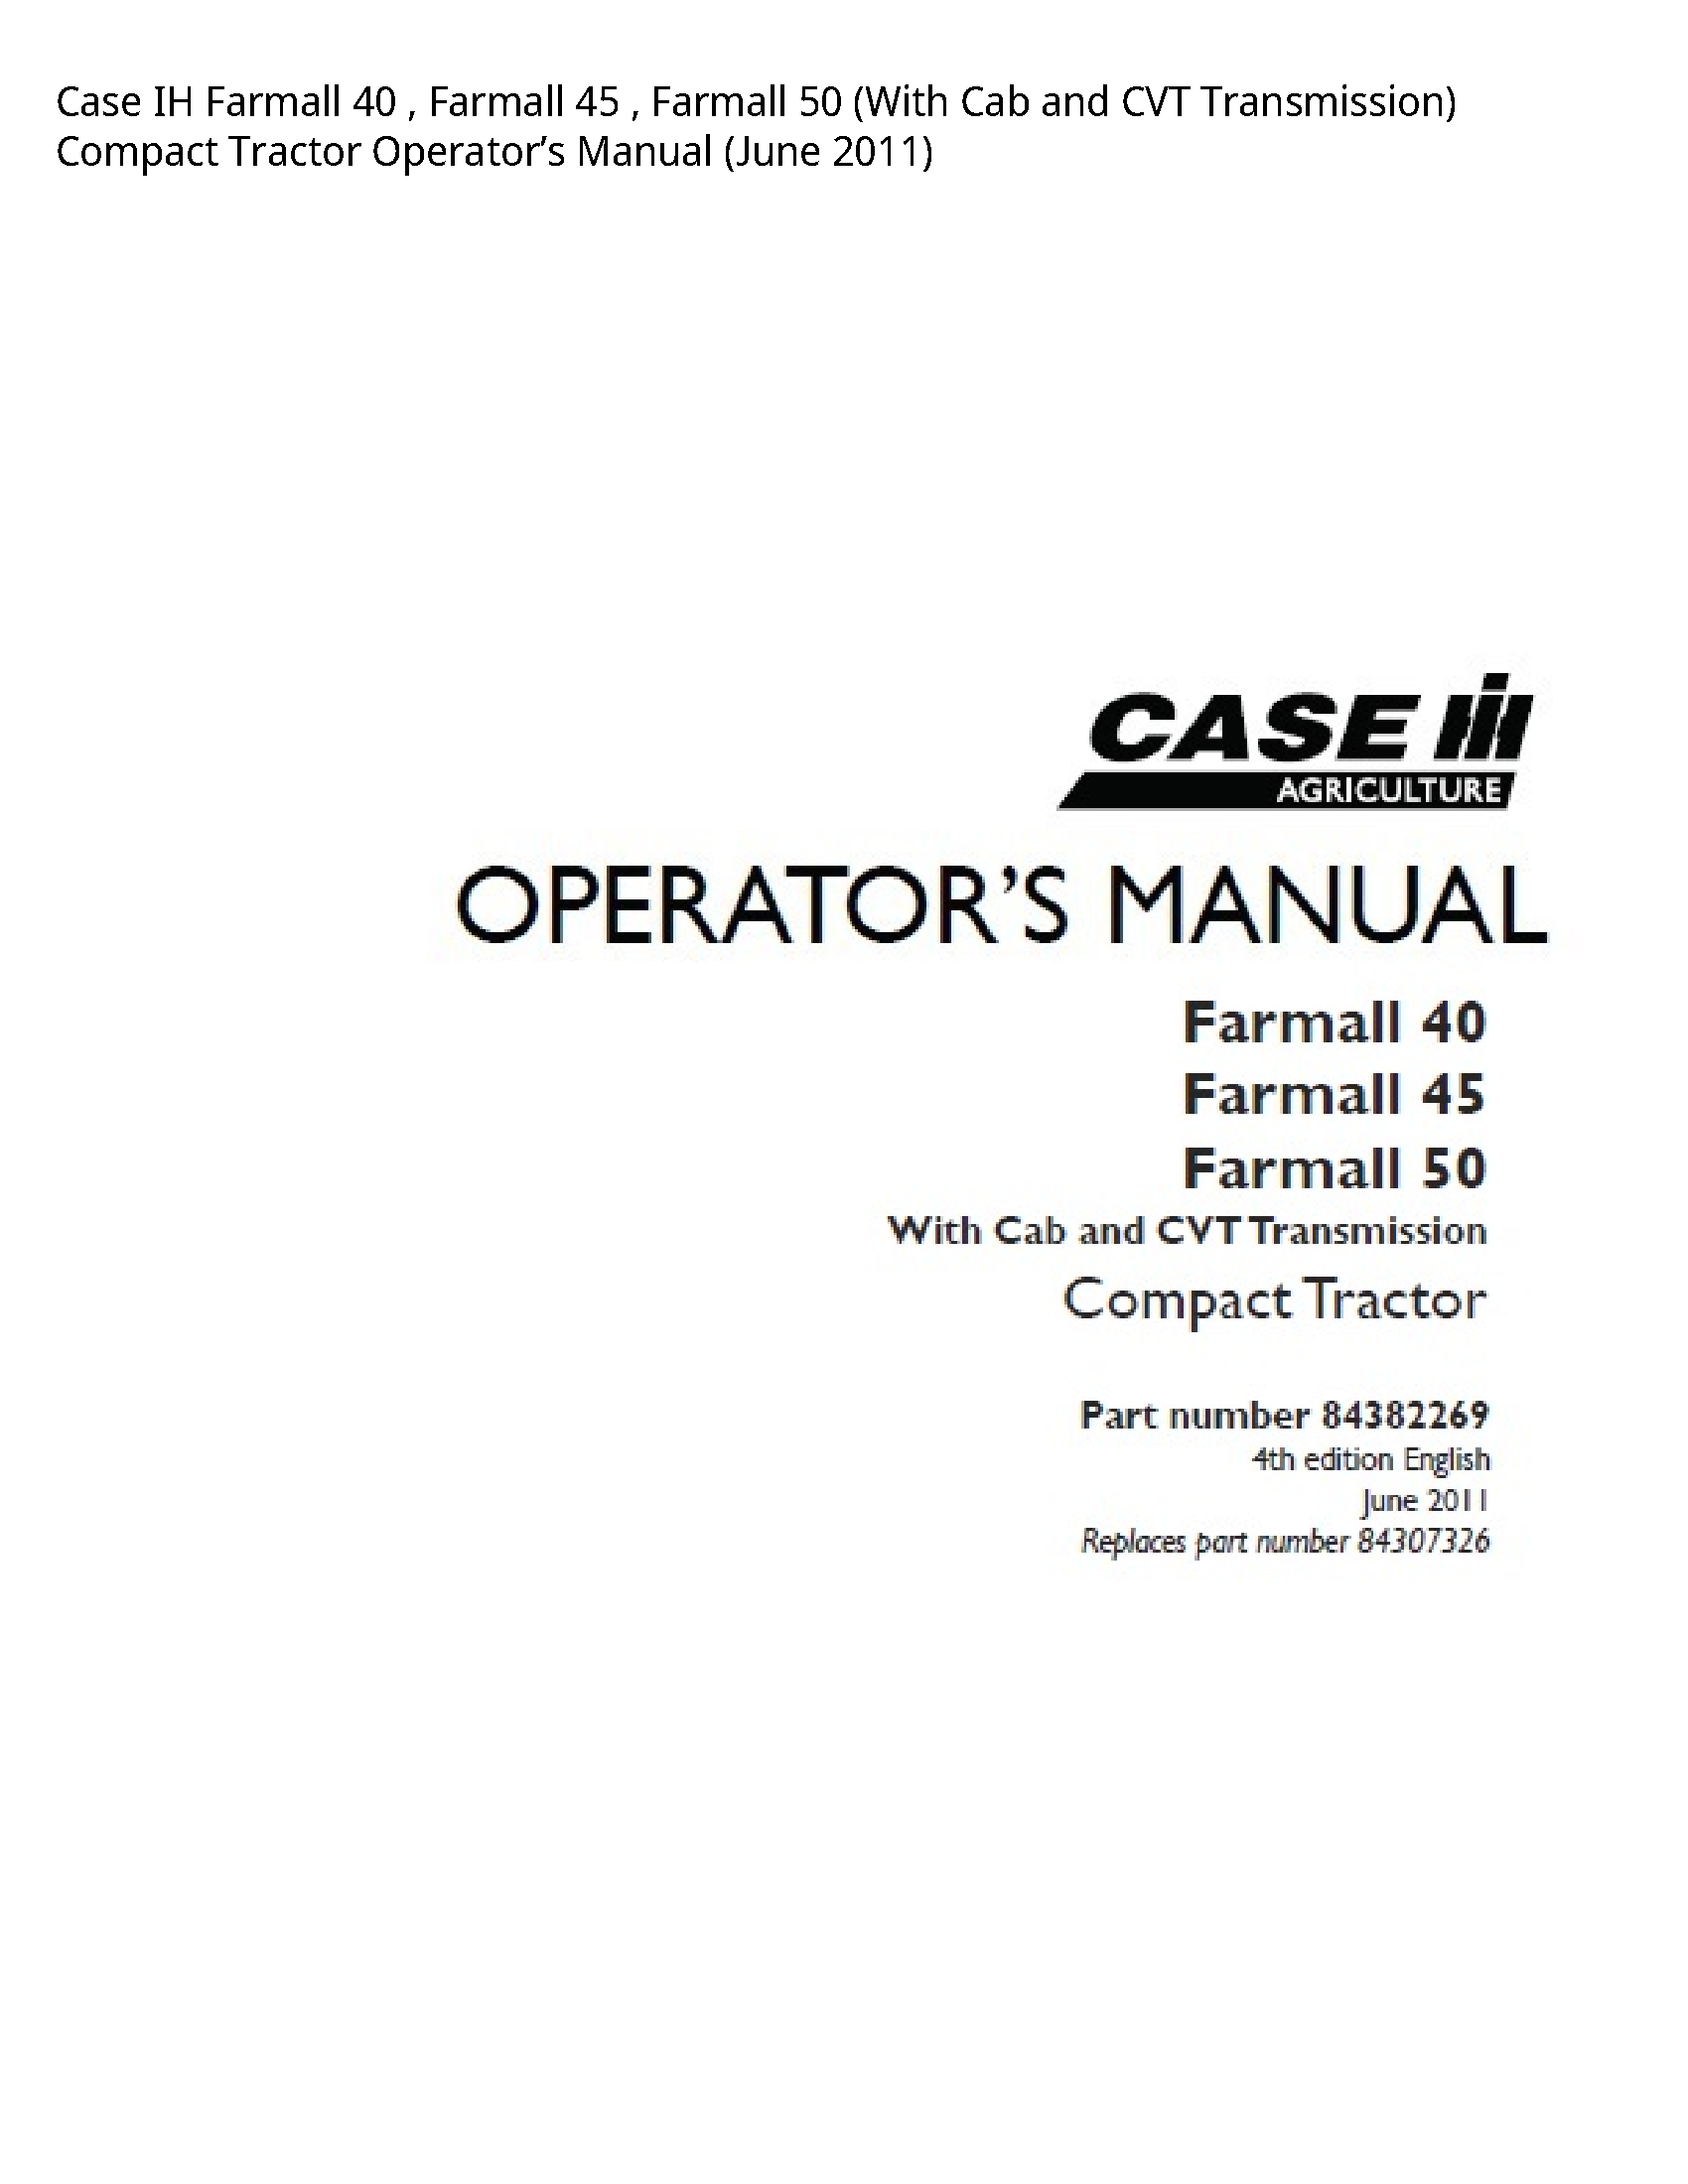 Case/Case IH 40 IH Farmall Farmall Farmall (With Cab  CVT Transmission) Compact Tractor Operator’s manual